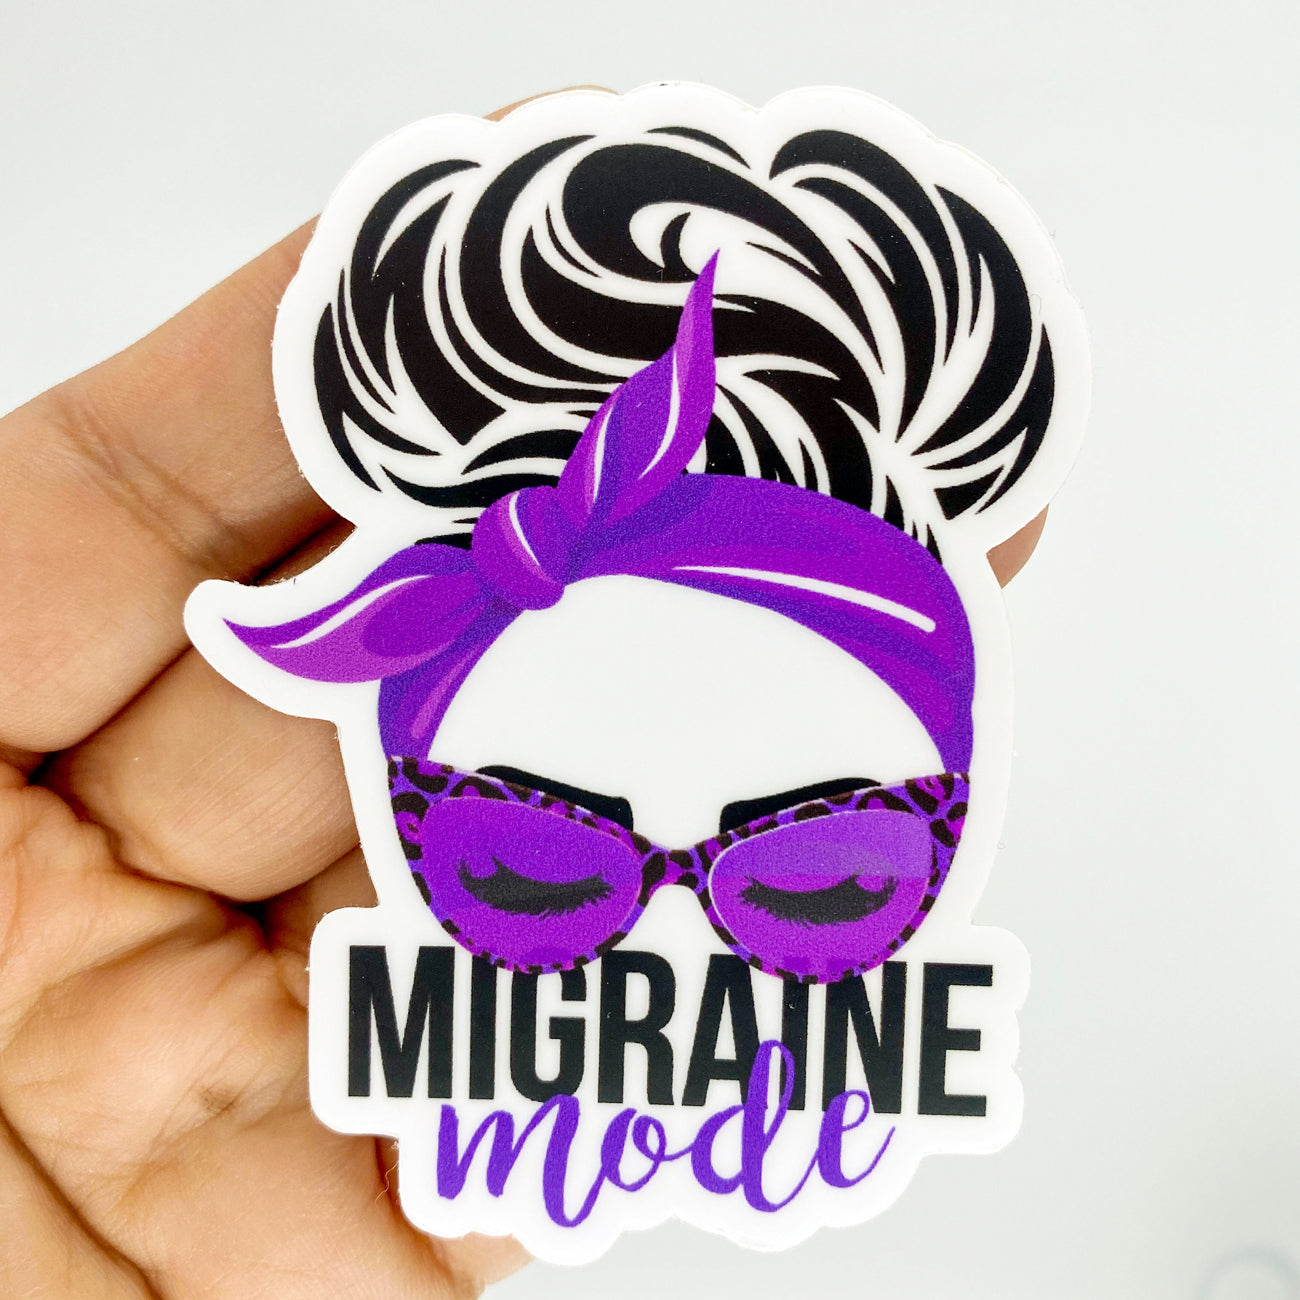 Migraine Mode